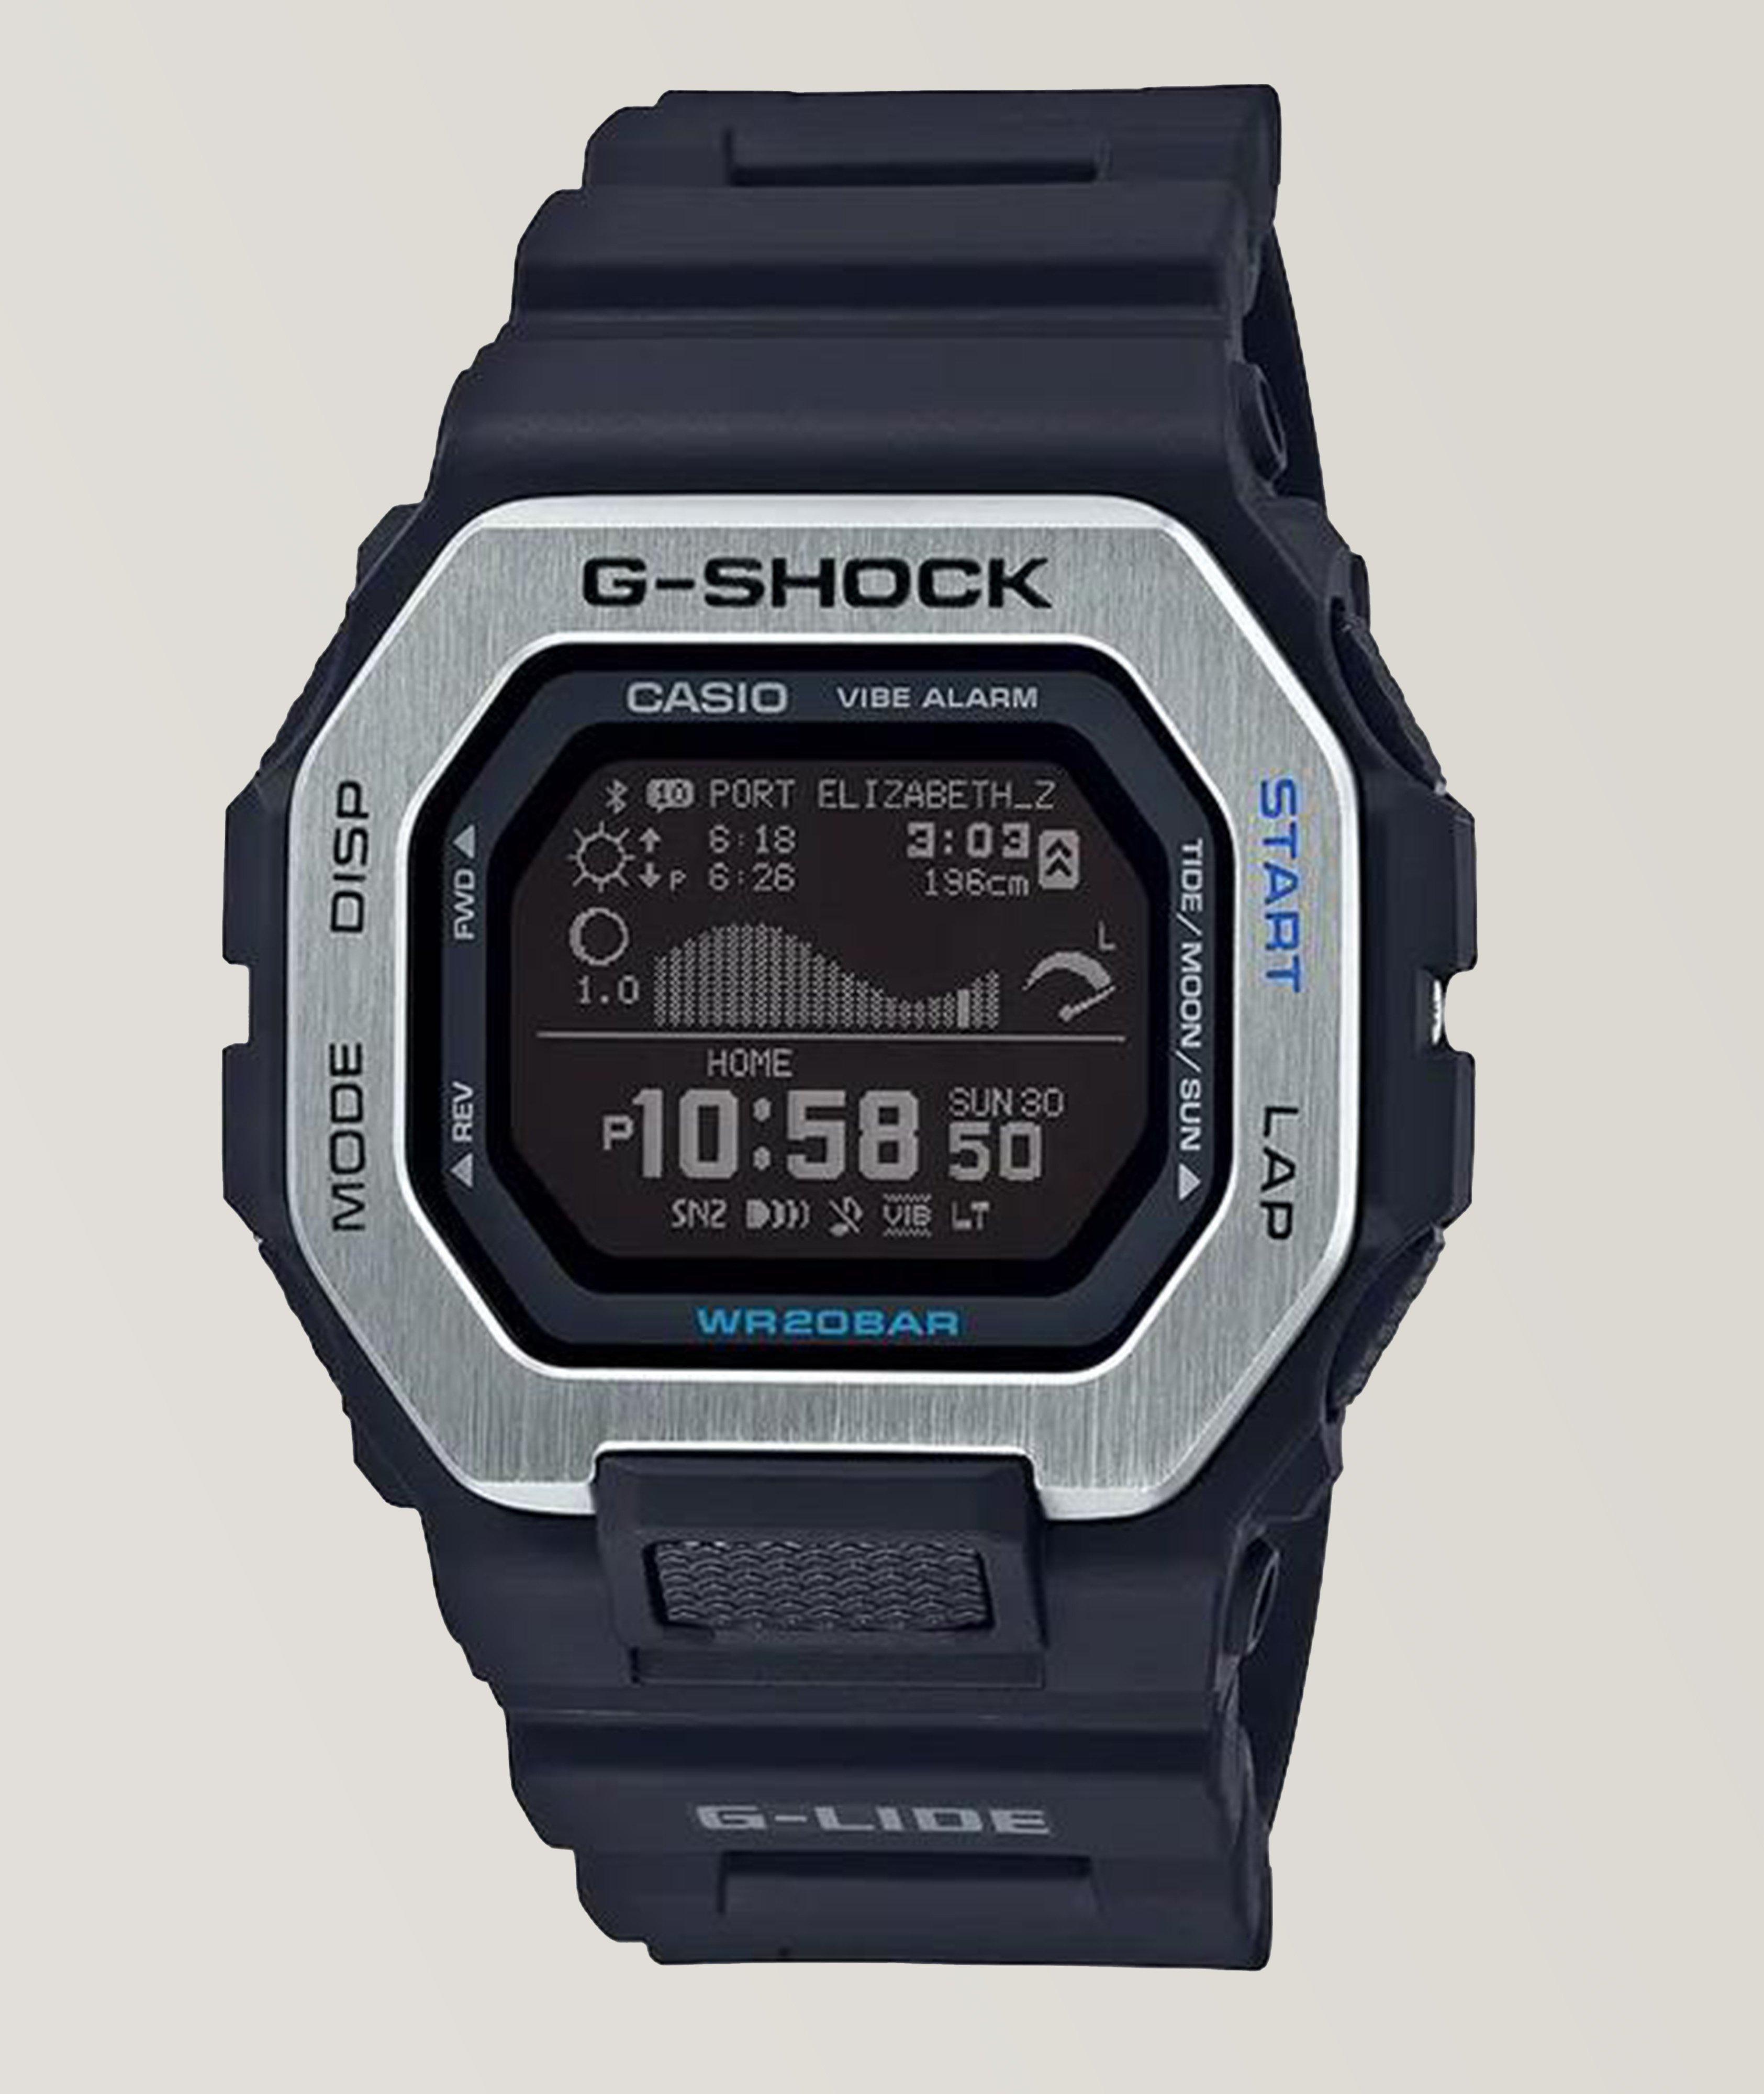 GBX100-1 Watch